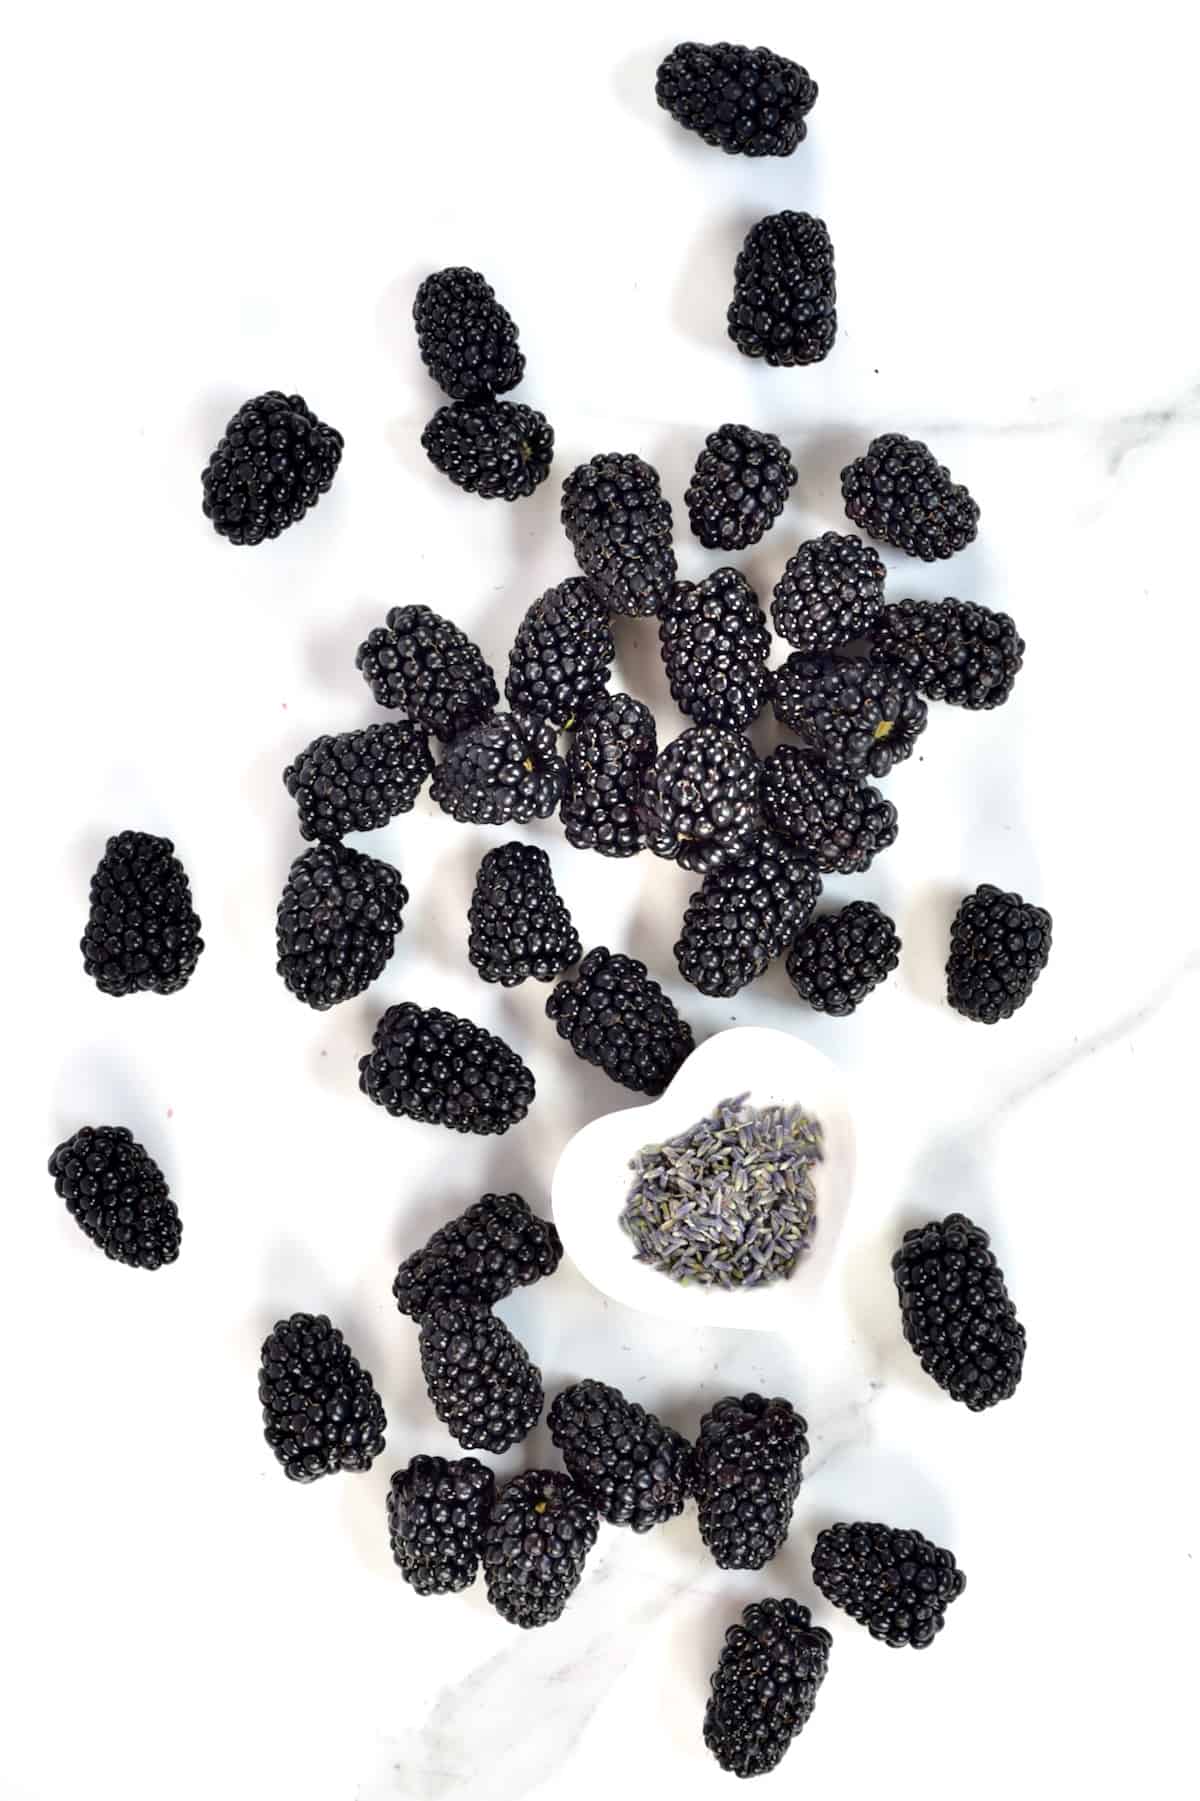 Spread of Blackberries and dried lavender flowers